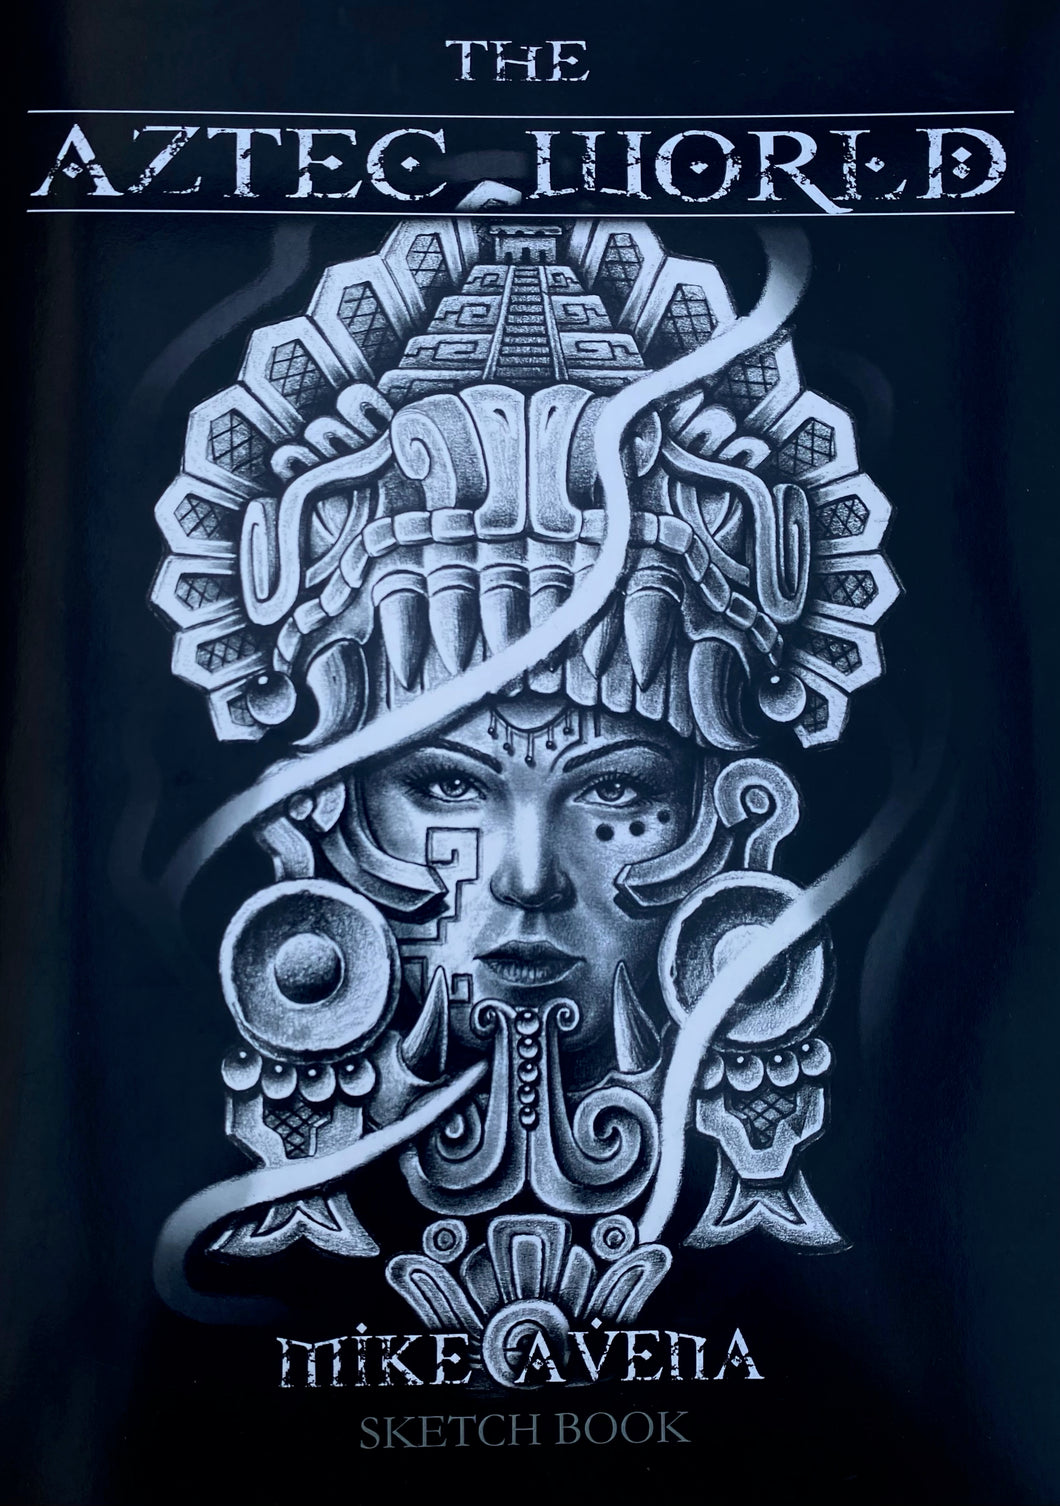 The Aztec World - Big Sleeps Ink